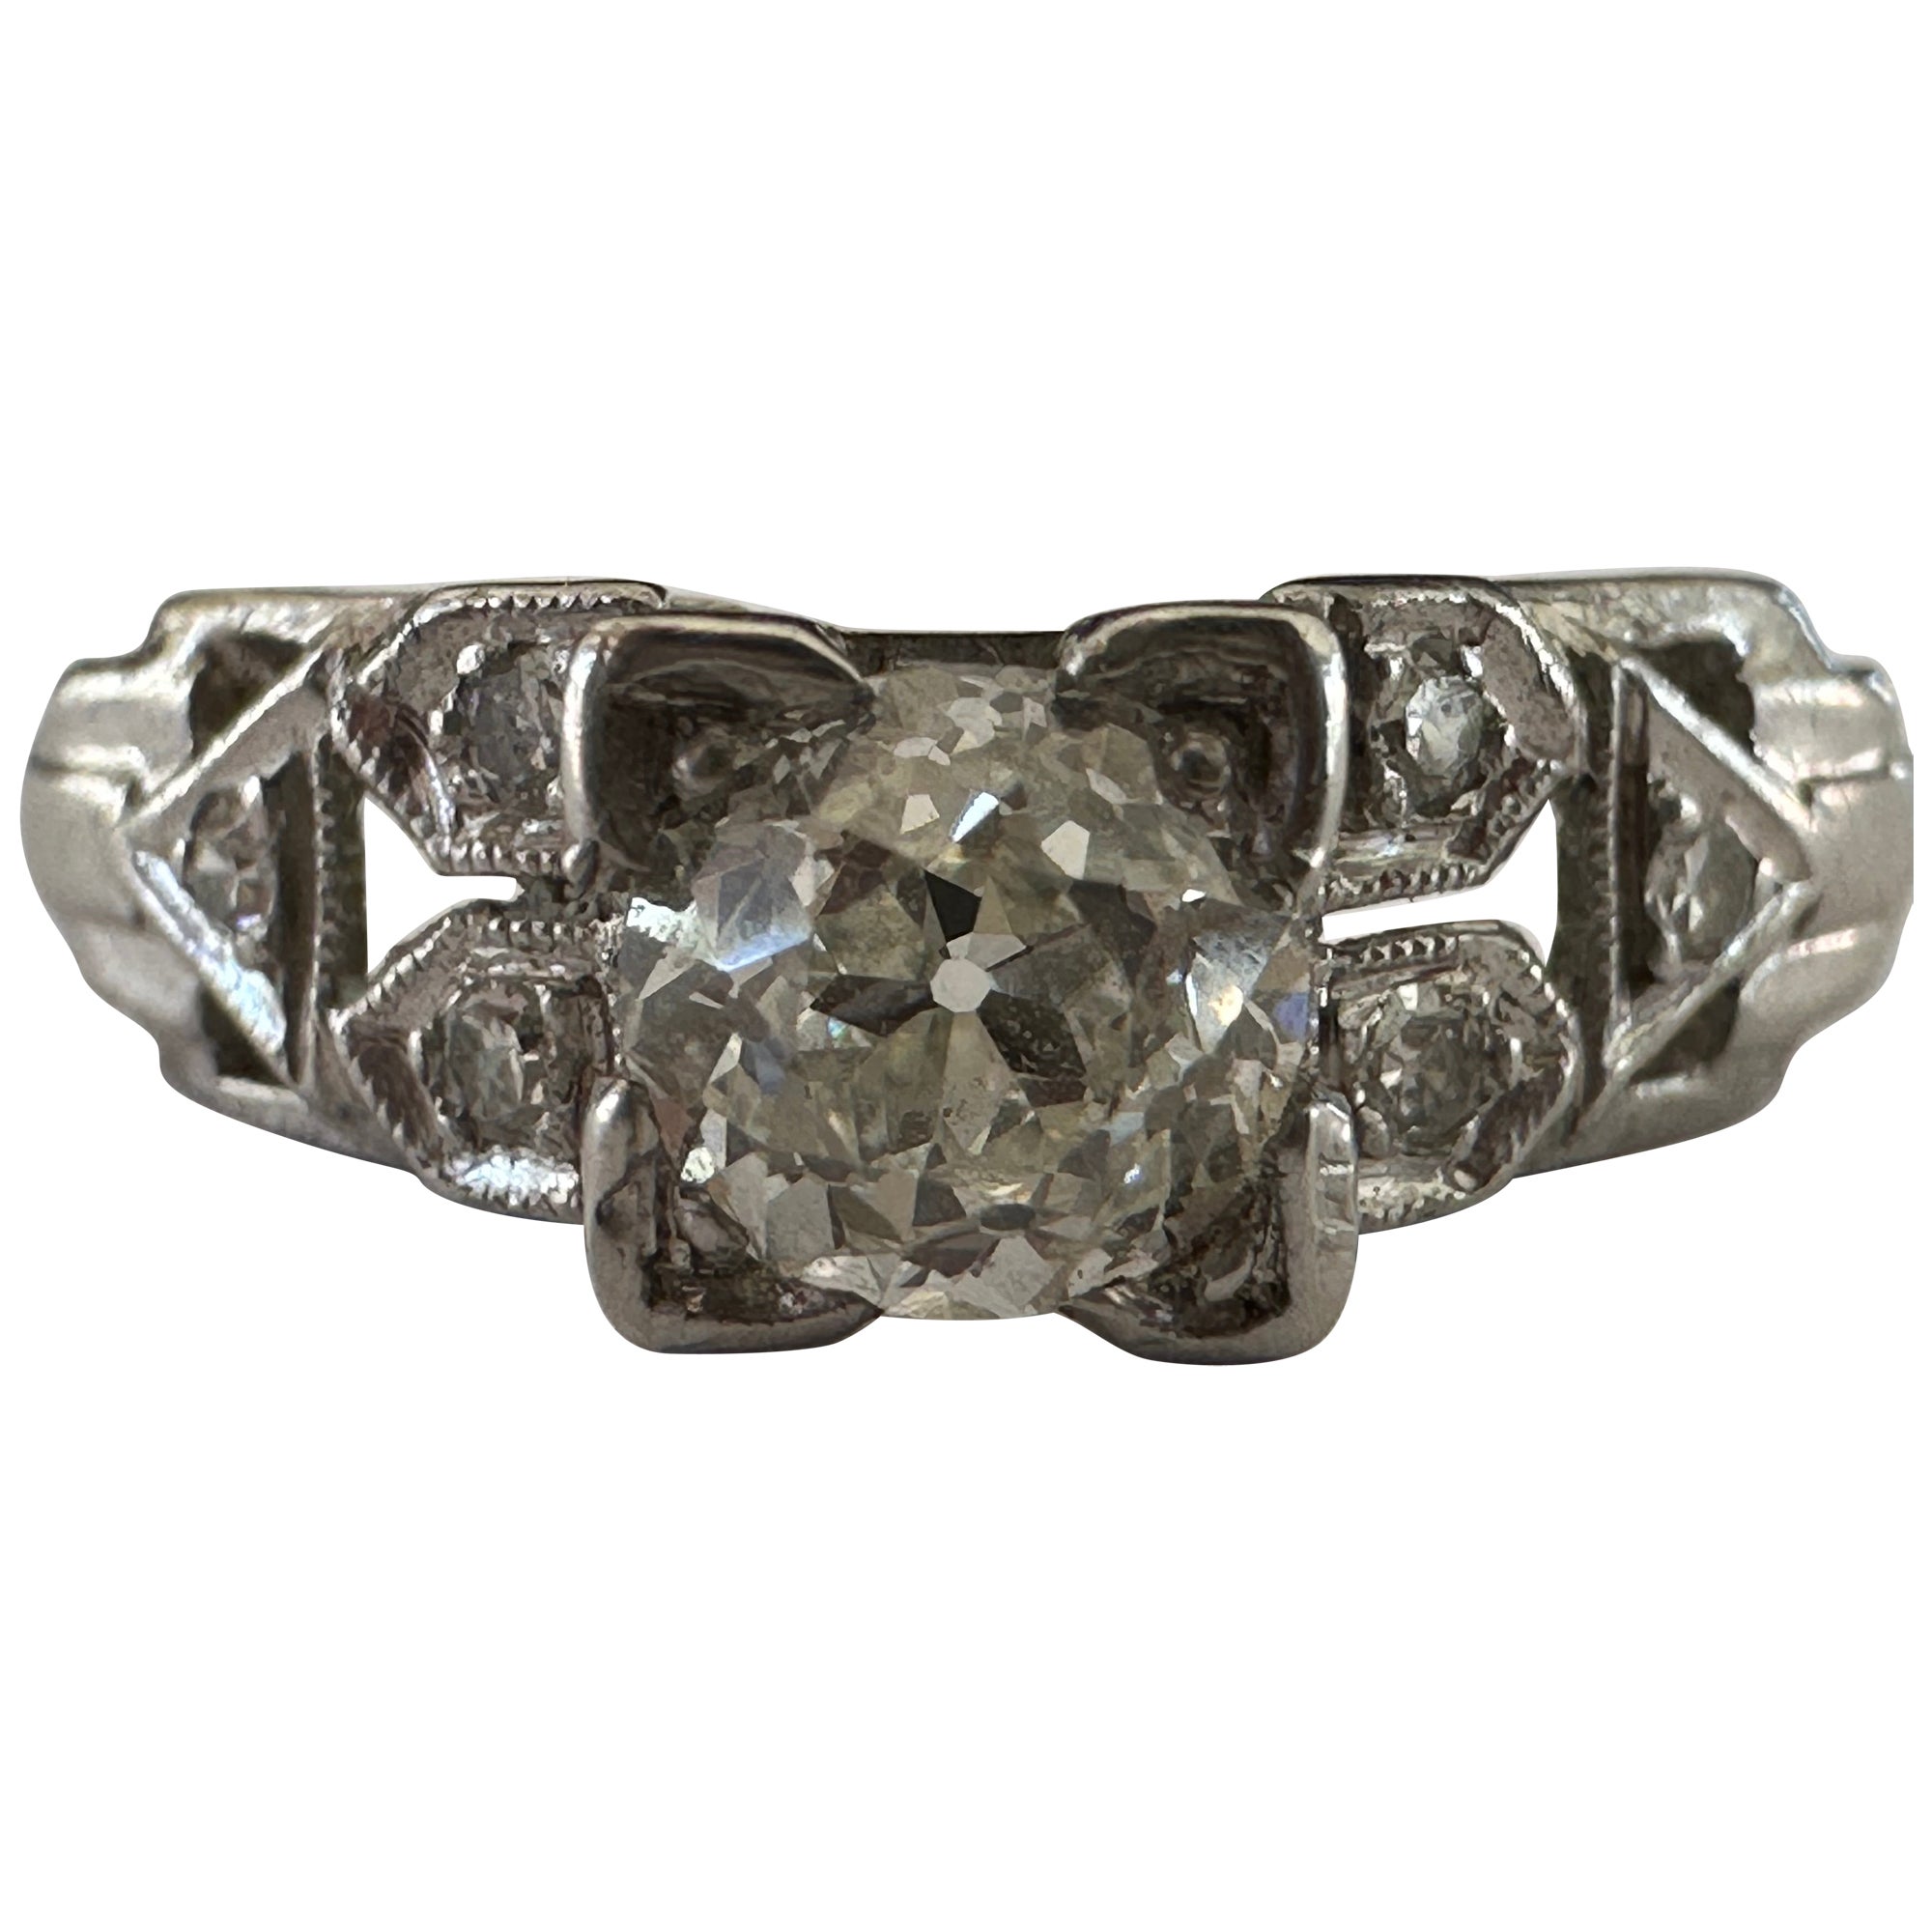 Art Deco 0.52-Carat Diamond Engagement Ring 